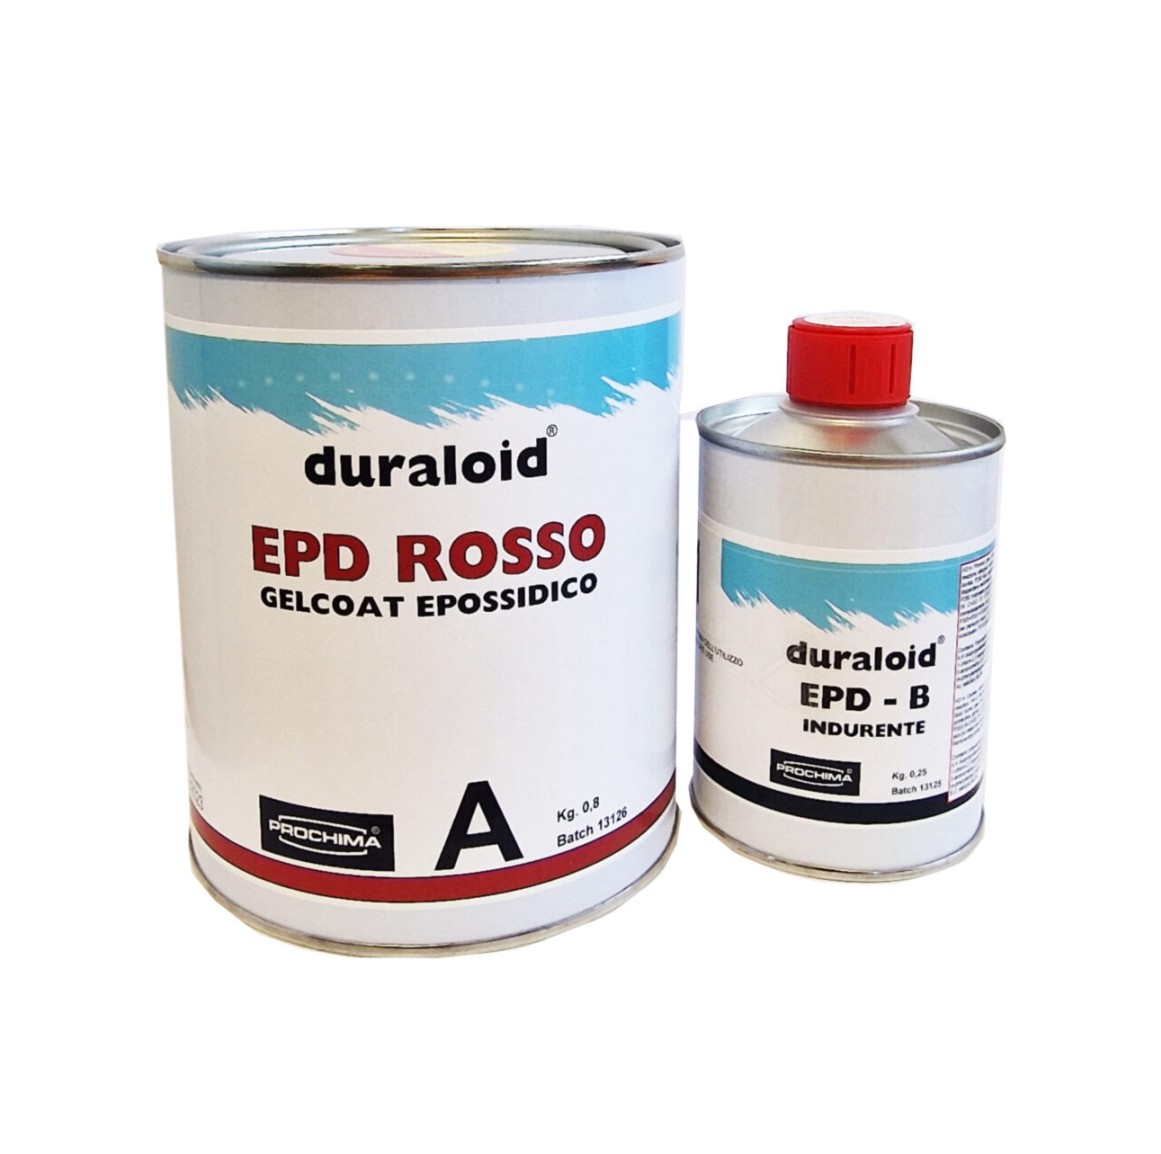 duraloid EPD rosso gelcoat epossidico